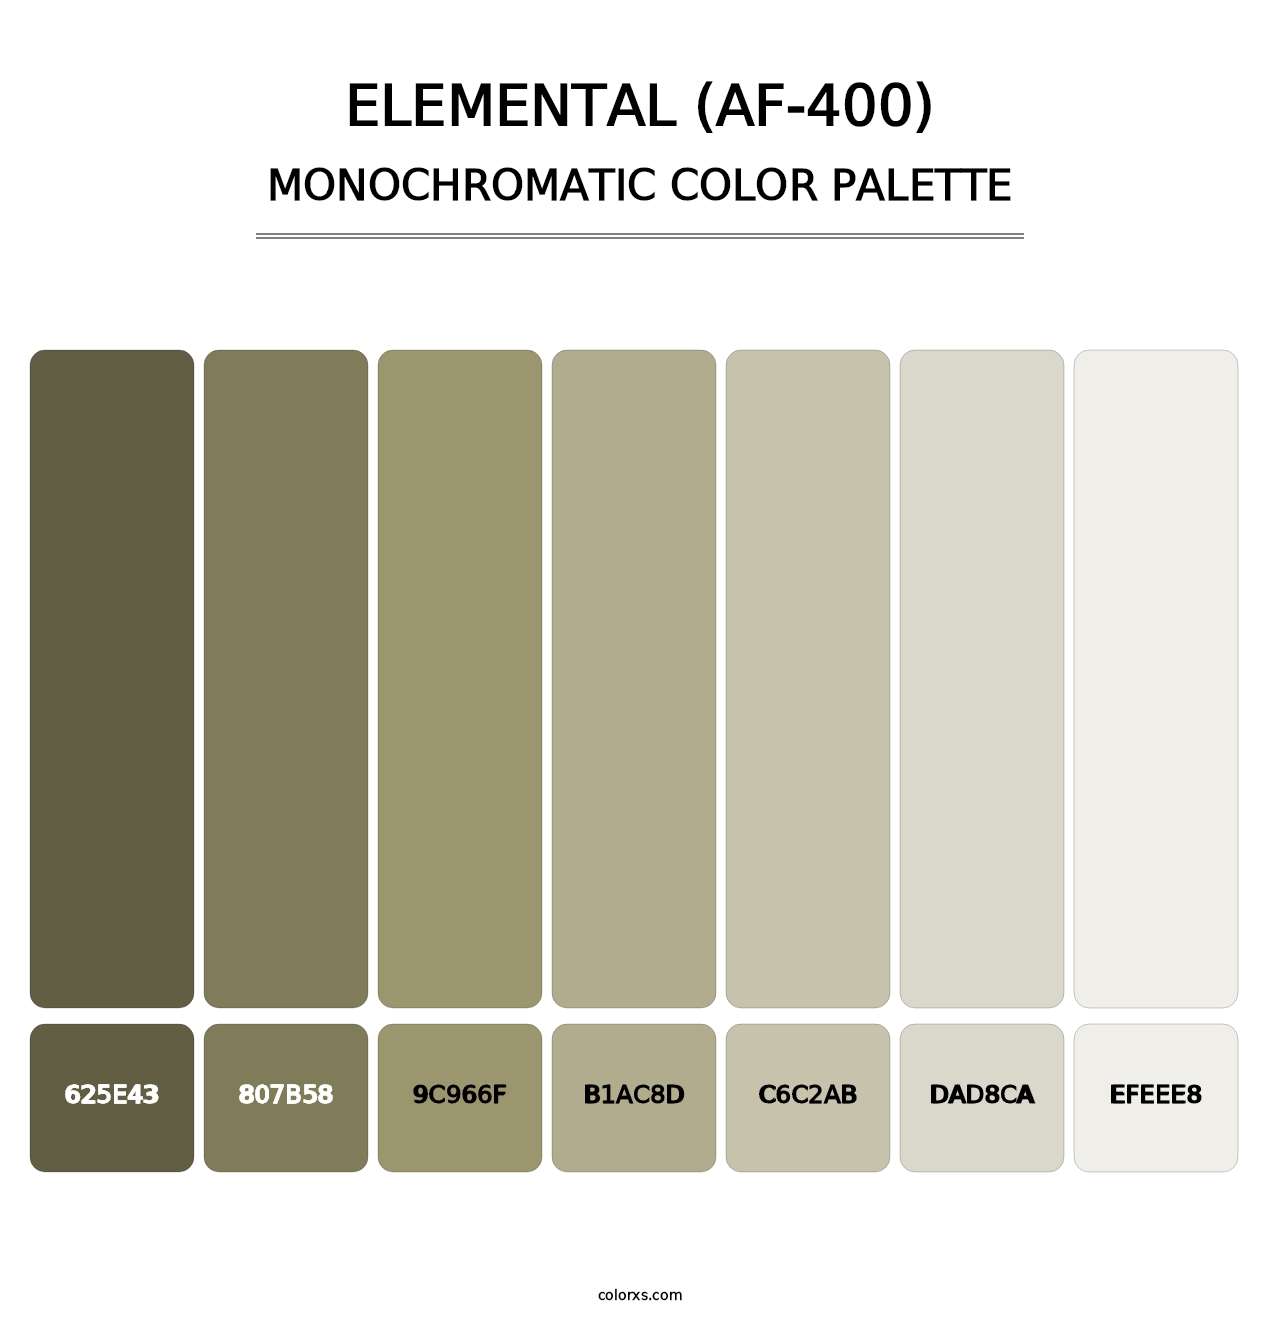 Elemental (AF-400) - Monochromatic Color Palette